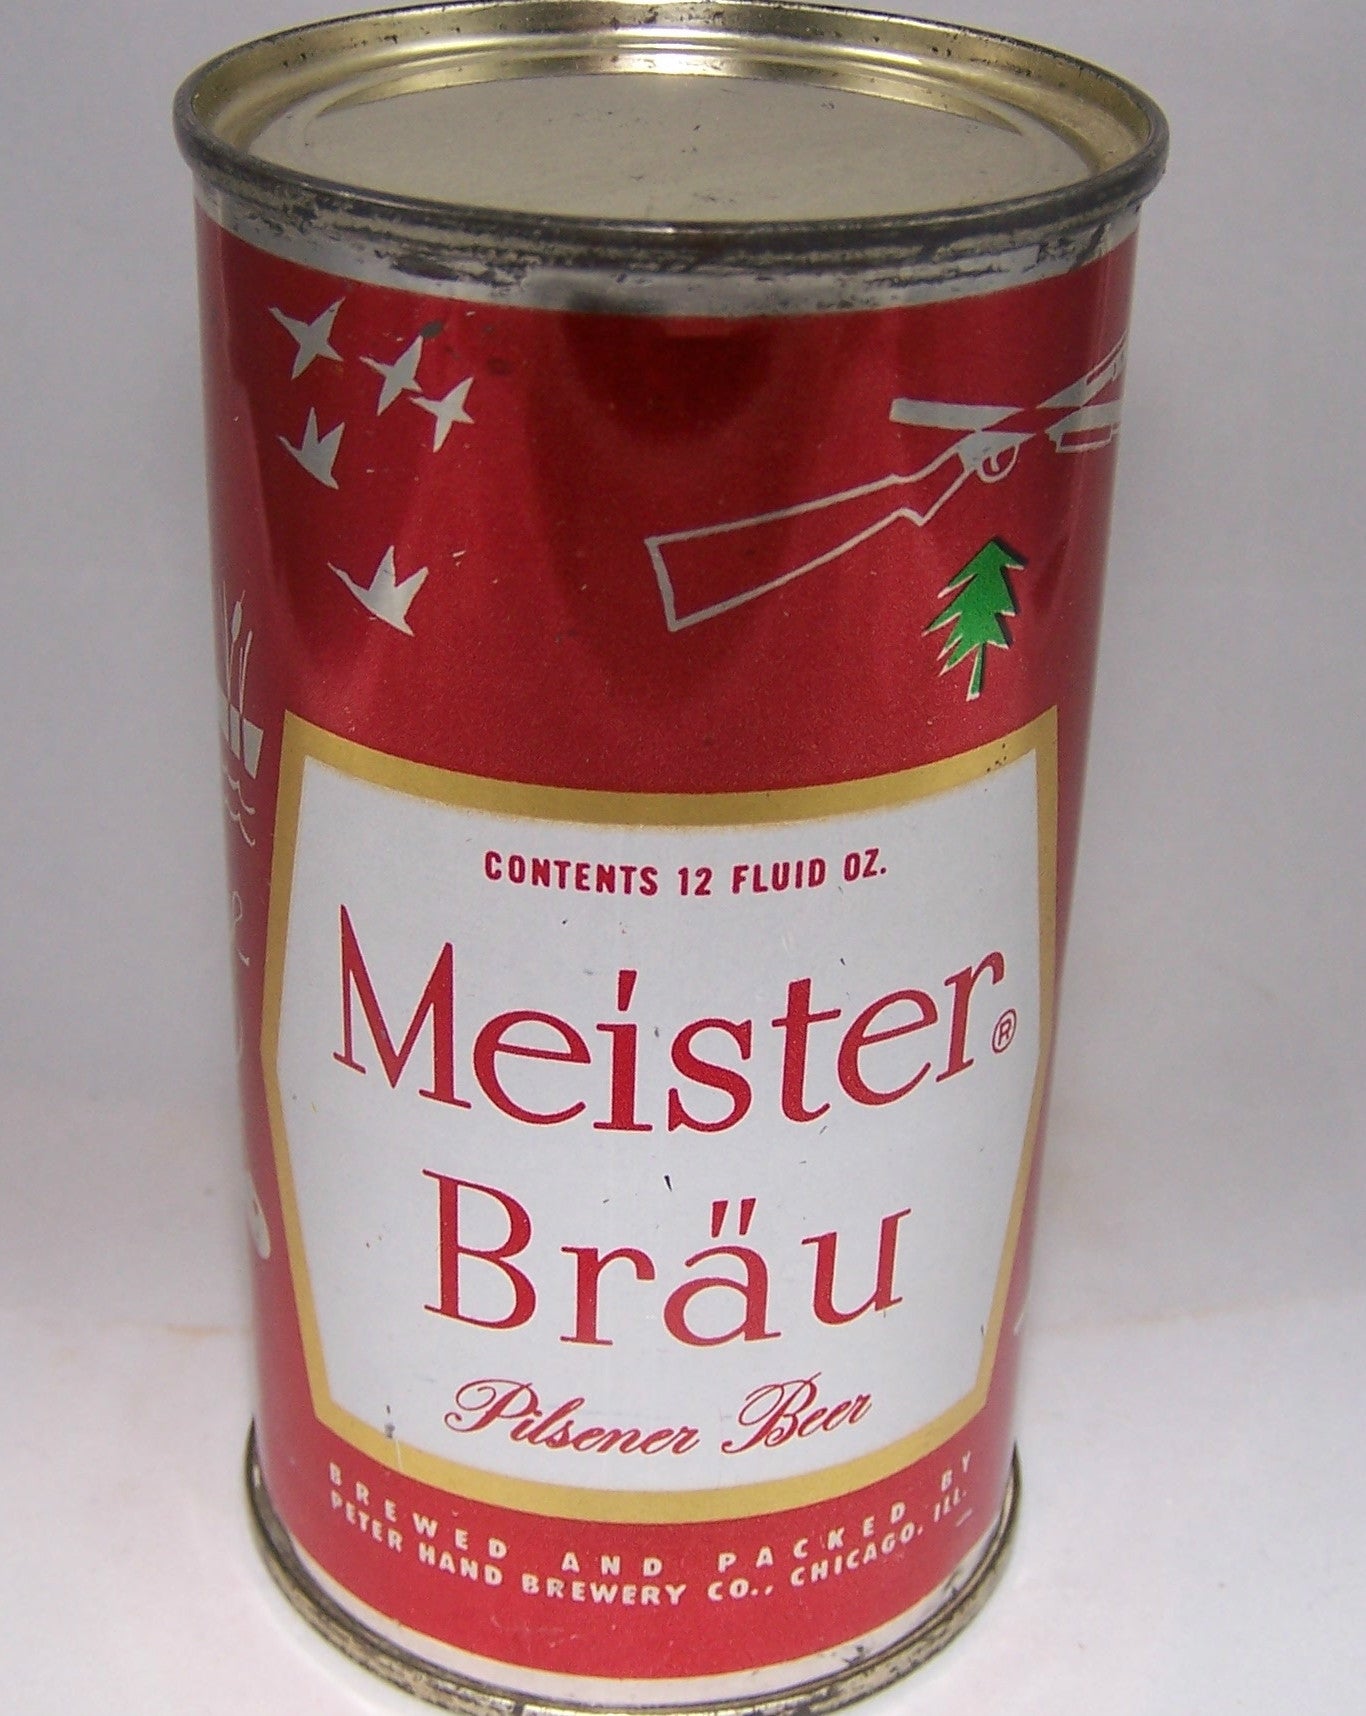 Meister Brau Pilsener Beer (Sno pack duck hunting,)USBC -95-40,  Grade 1 to 1/1+ Sold on 10/03/15